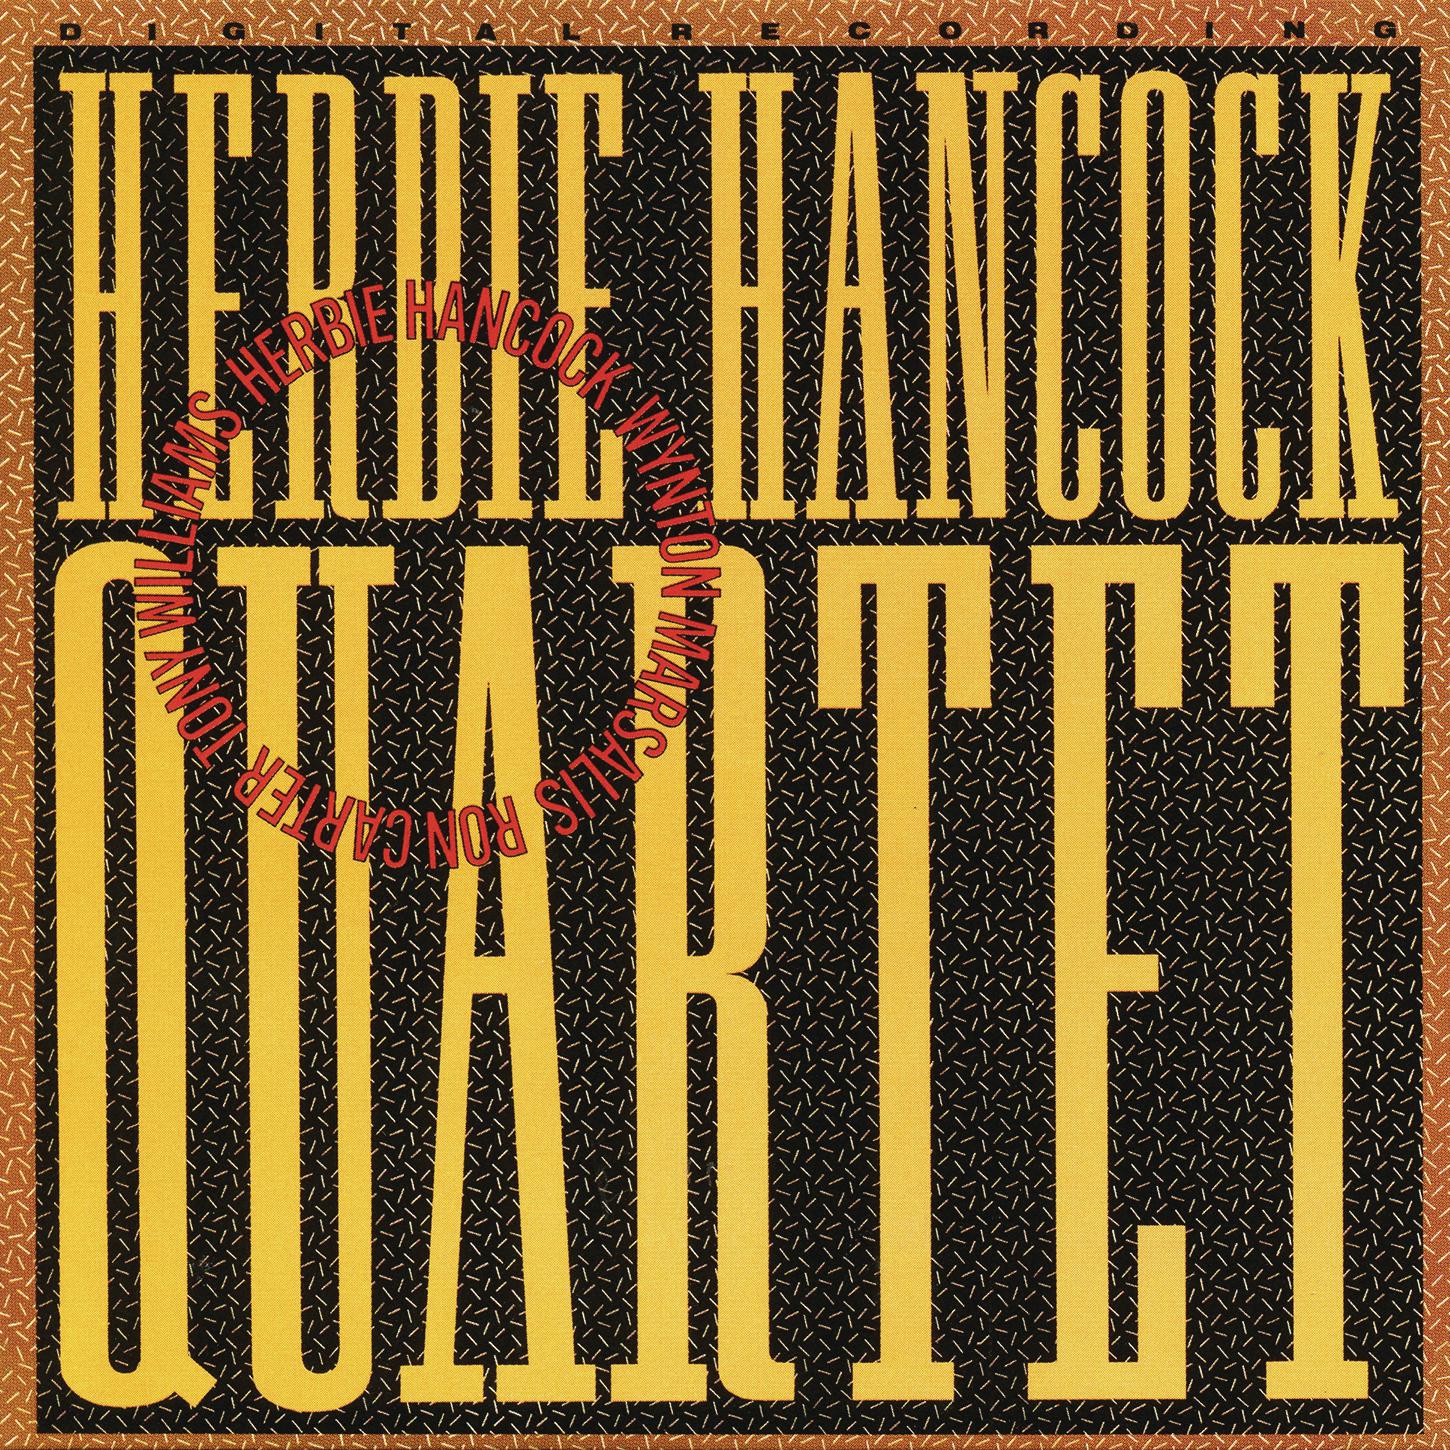 Herbie Hancock - Quartet (1982/2000) [HDTracks FLAC 24bit/96kHz]